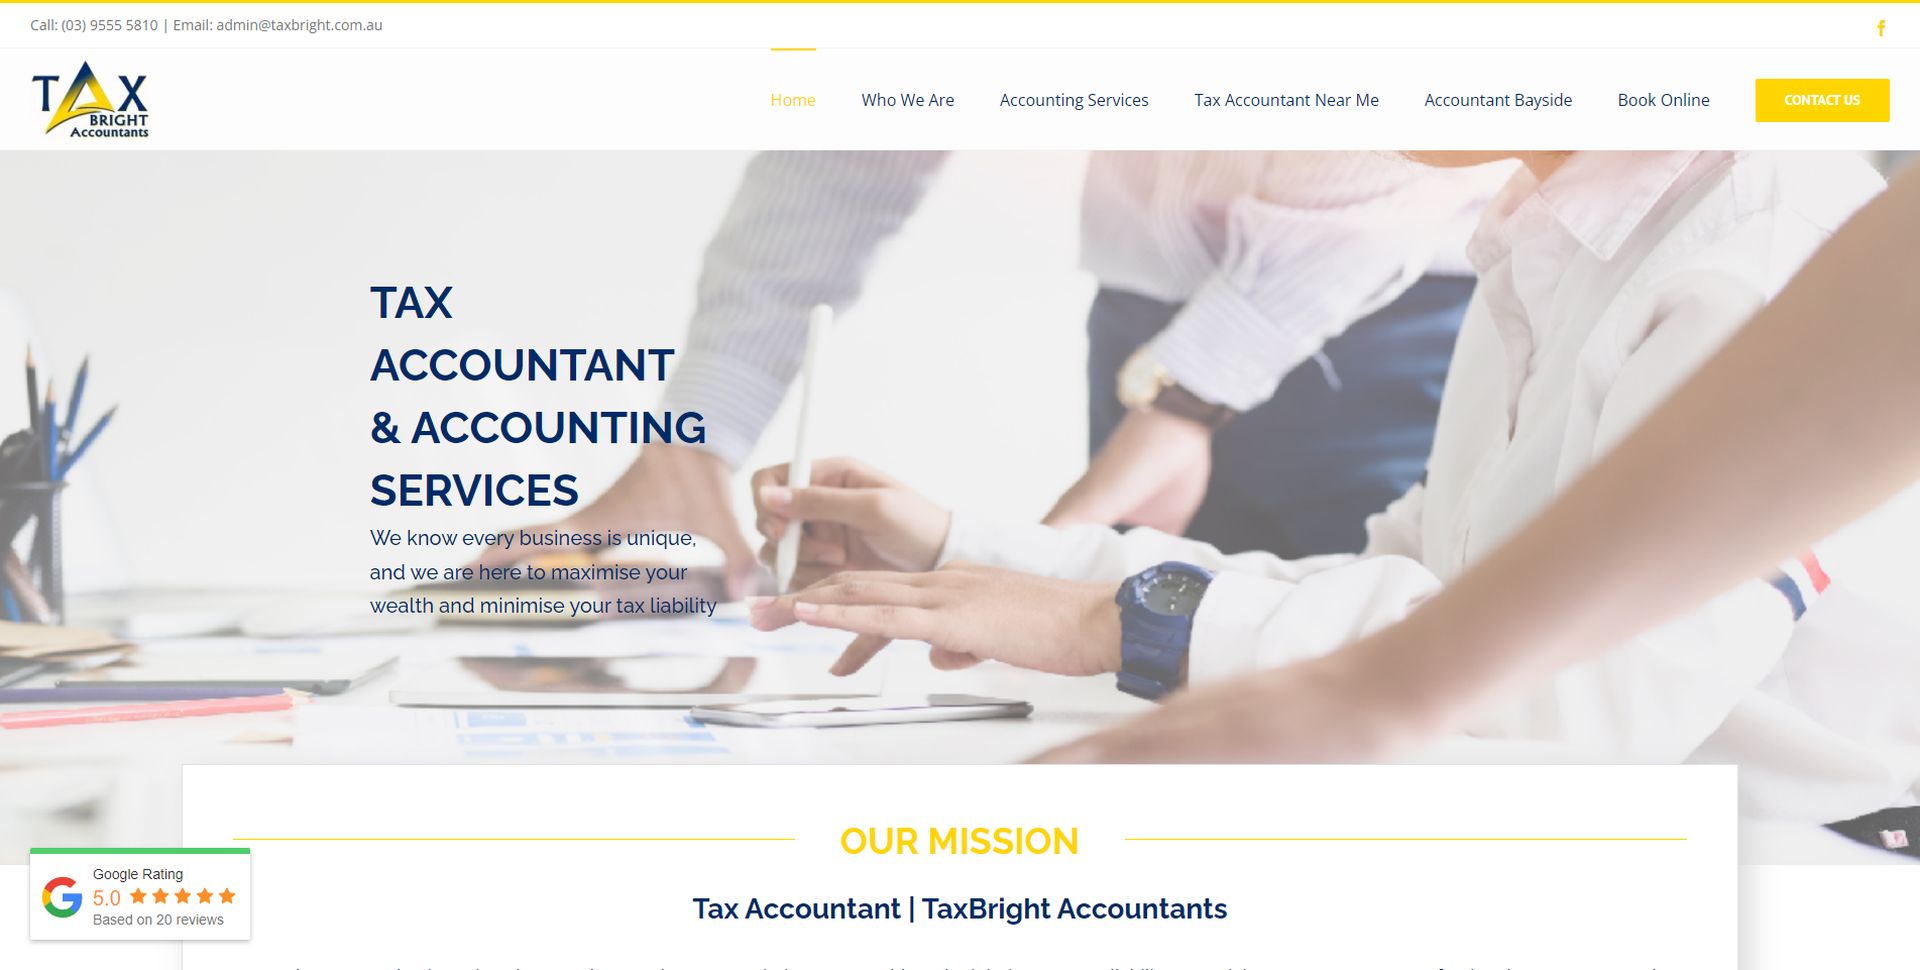 taxbright accountants